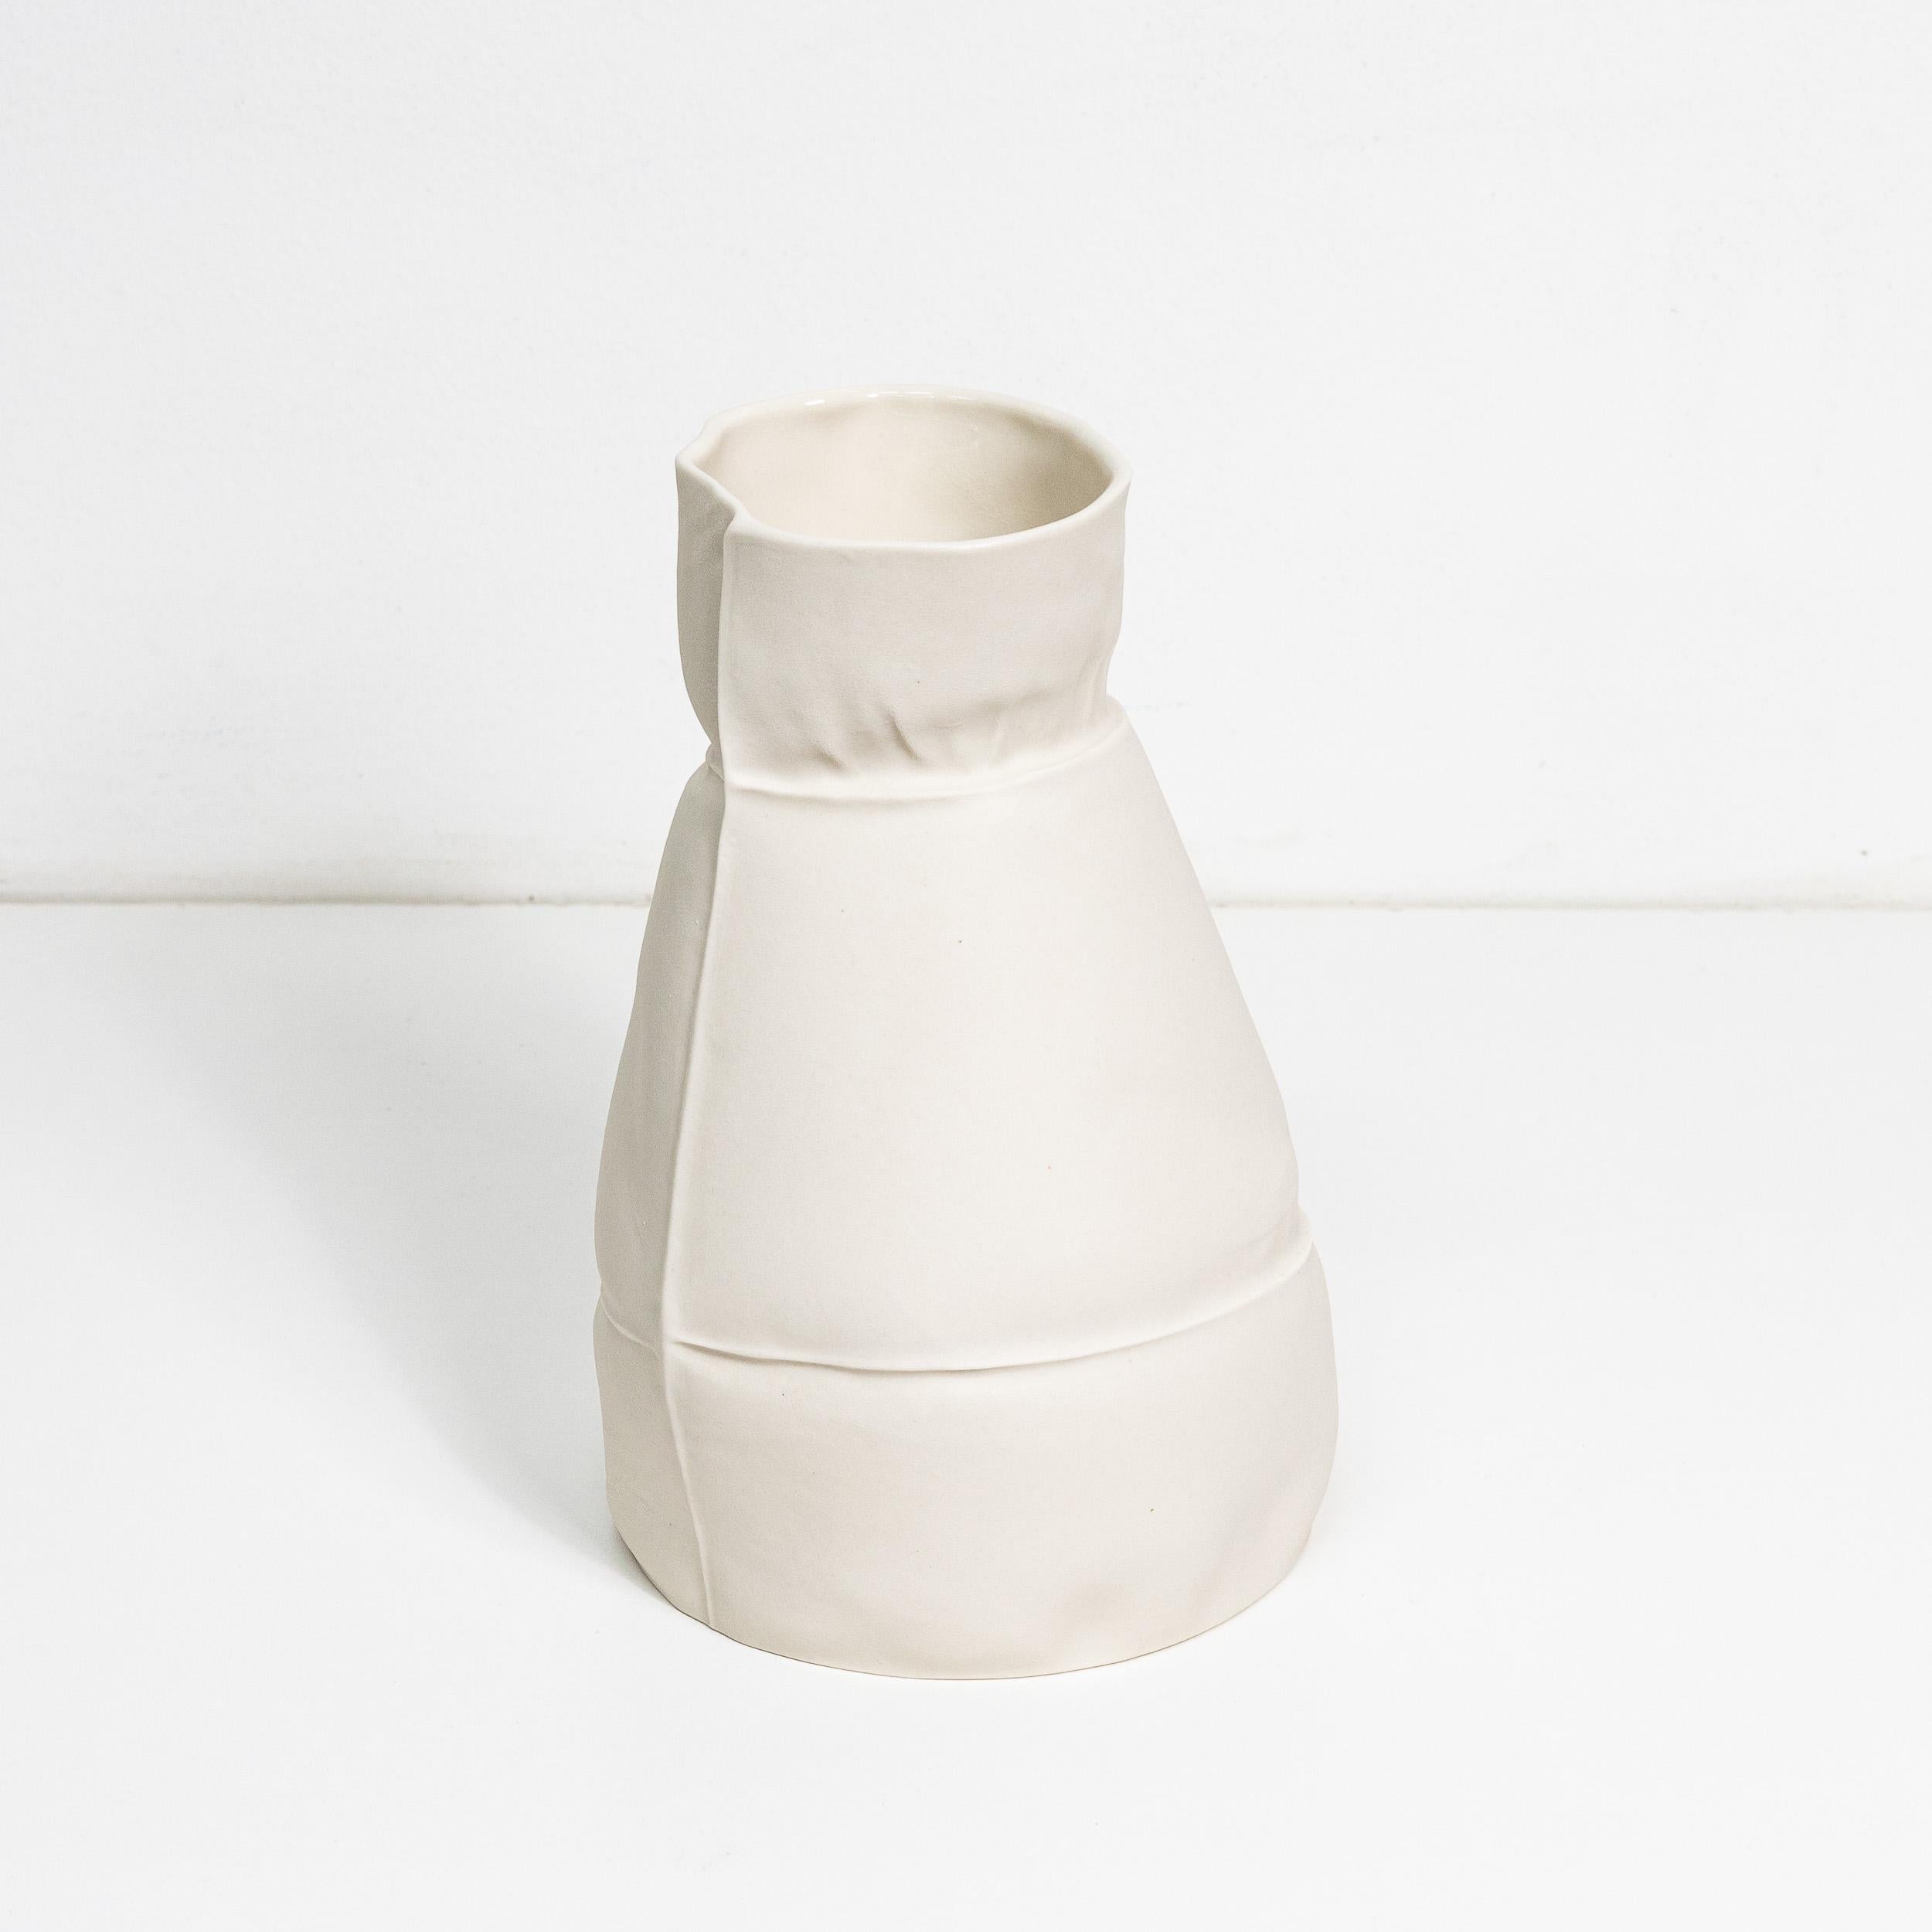 Organic Modern Organic White Ceramic Kawa Vase #16, Leather-Cast Porcelain Flower Vessel For Sale